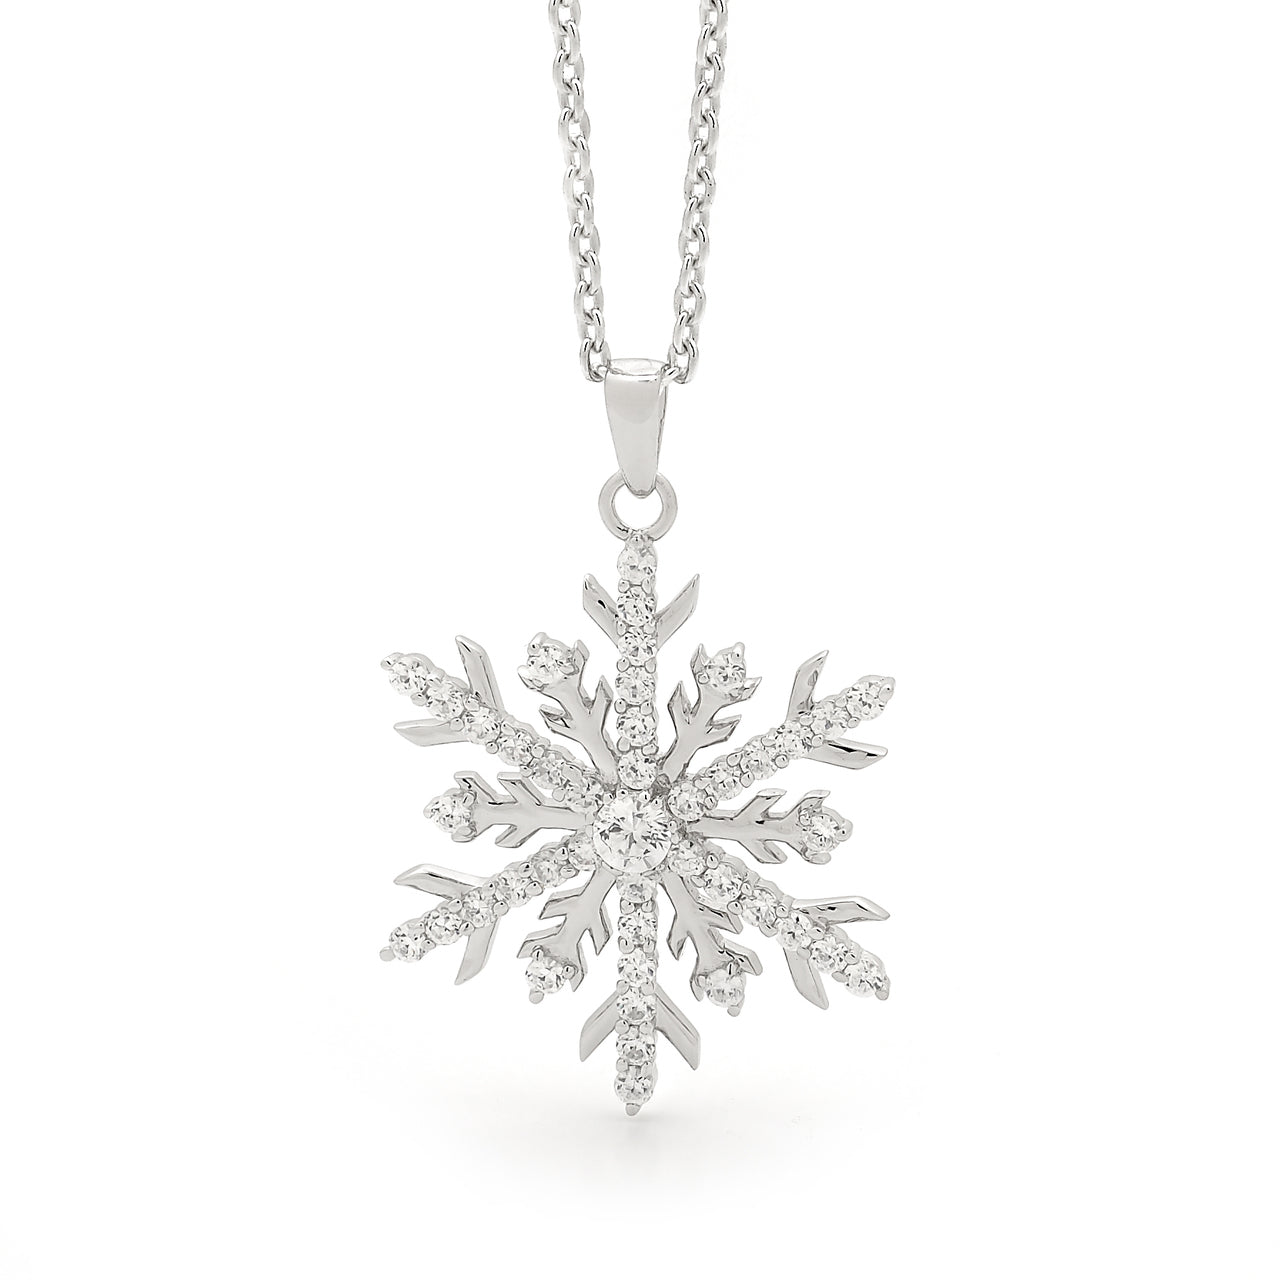 Stunning Large Snowflake Necklace Pendant